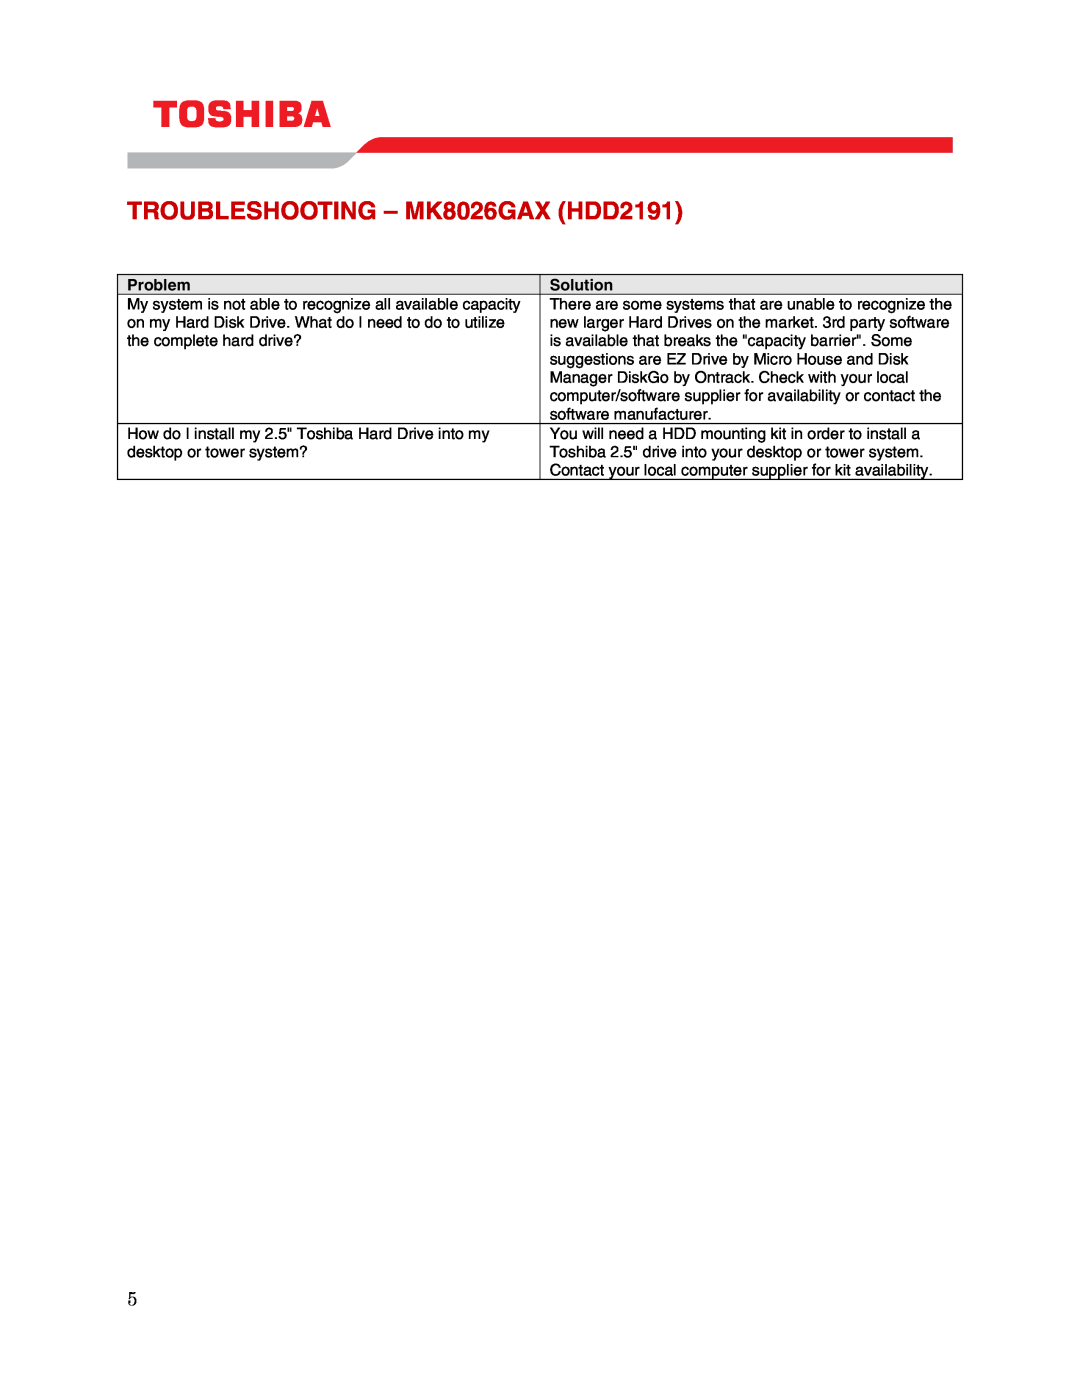 Toshiba user manual TROUBLESHOOTING - MK8026GAX HDD2191, Problem, Solution 